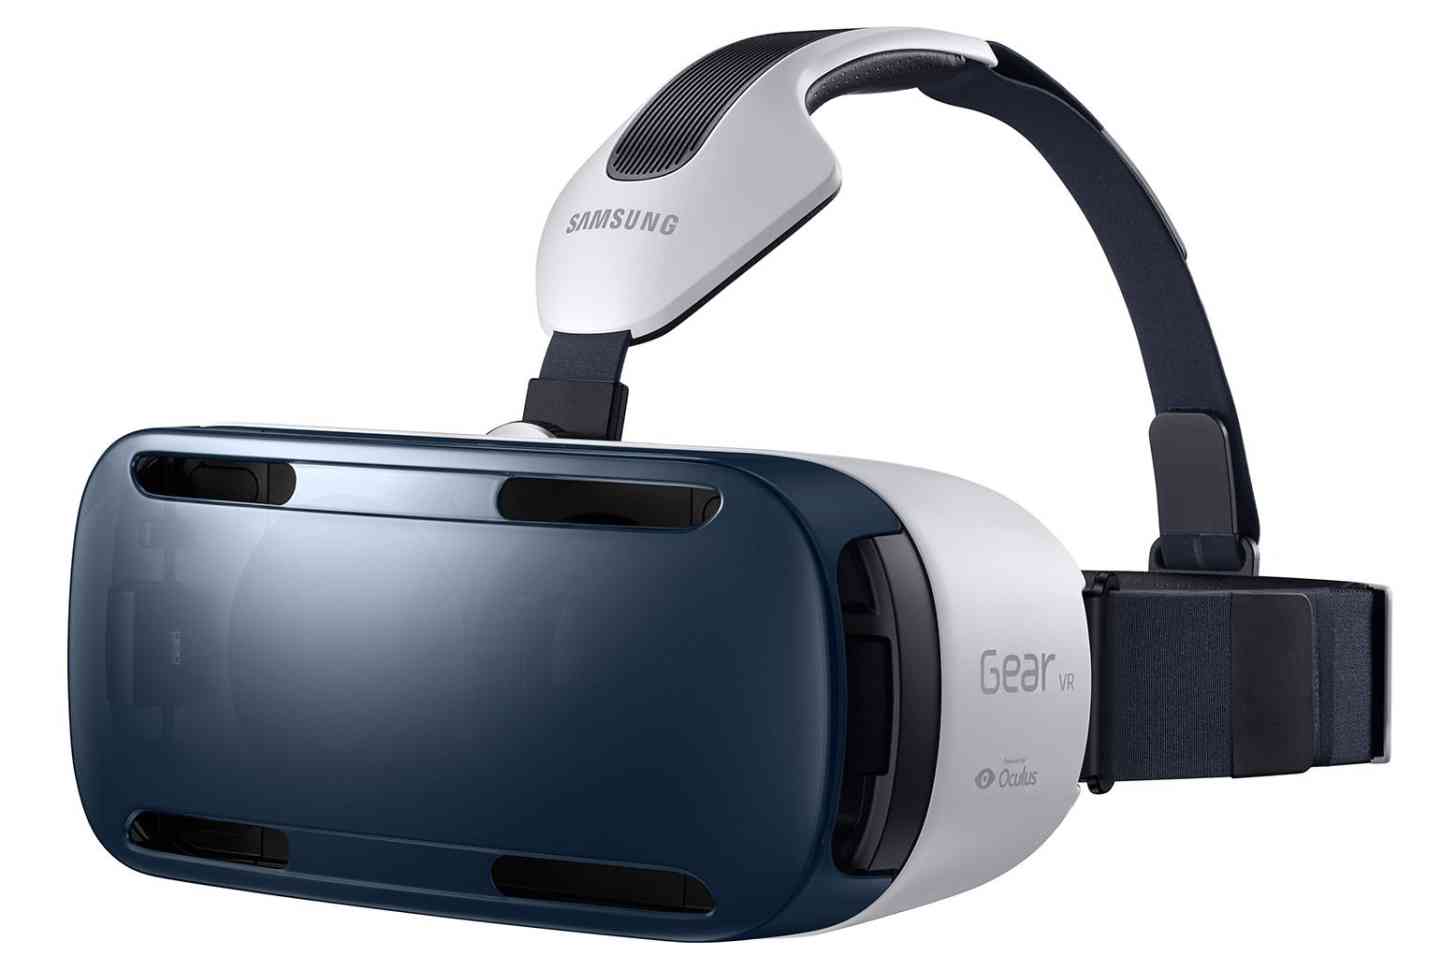 Samsung Gear VR virtual reality headset angle